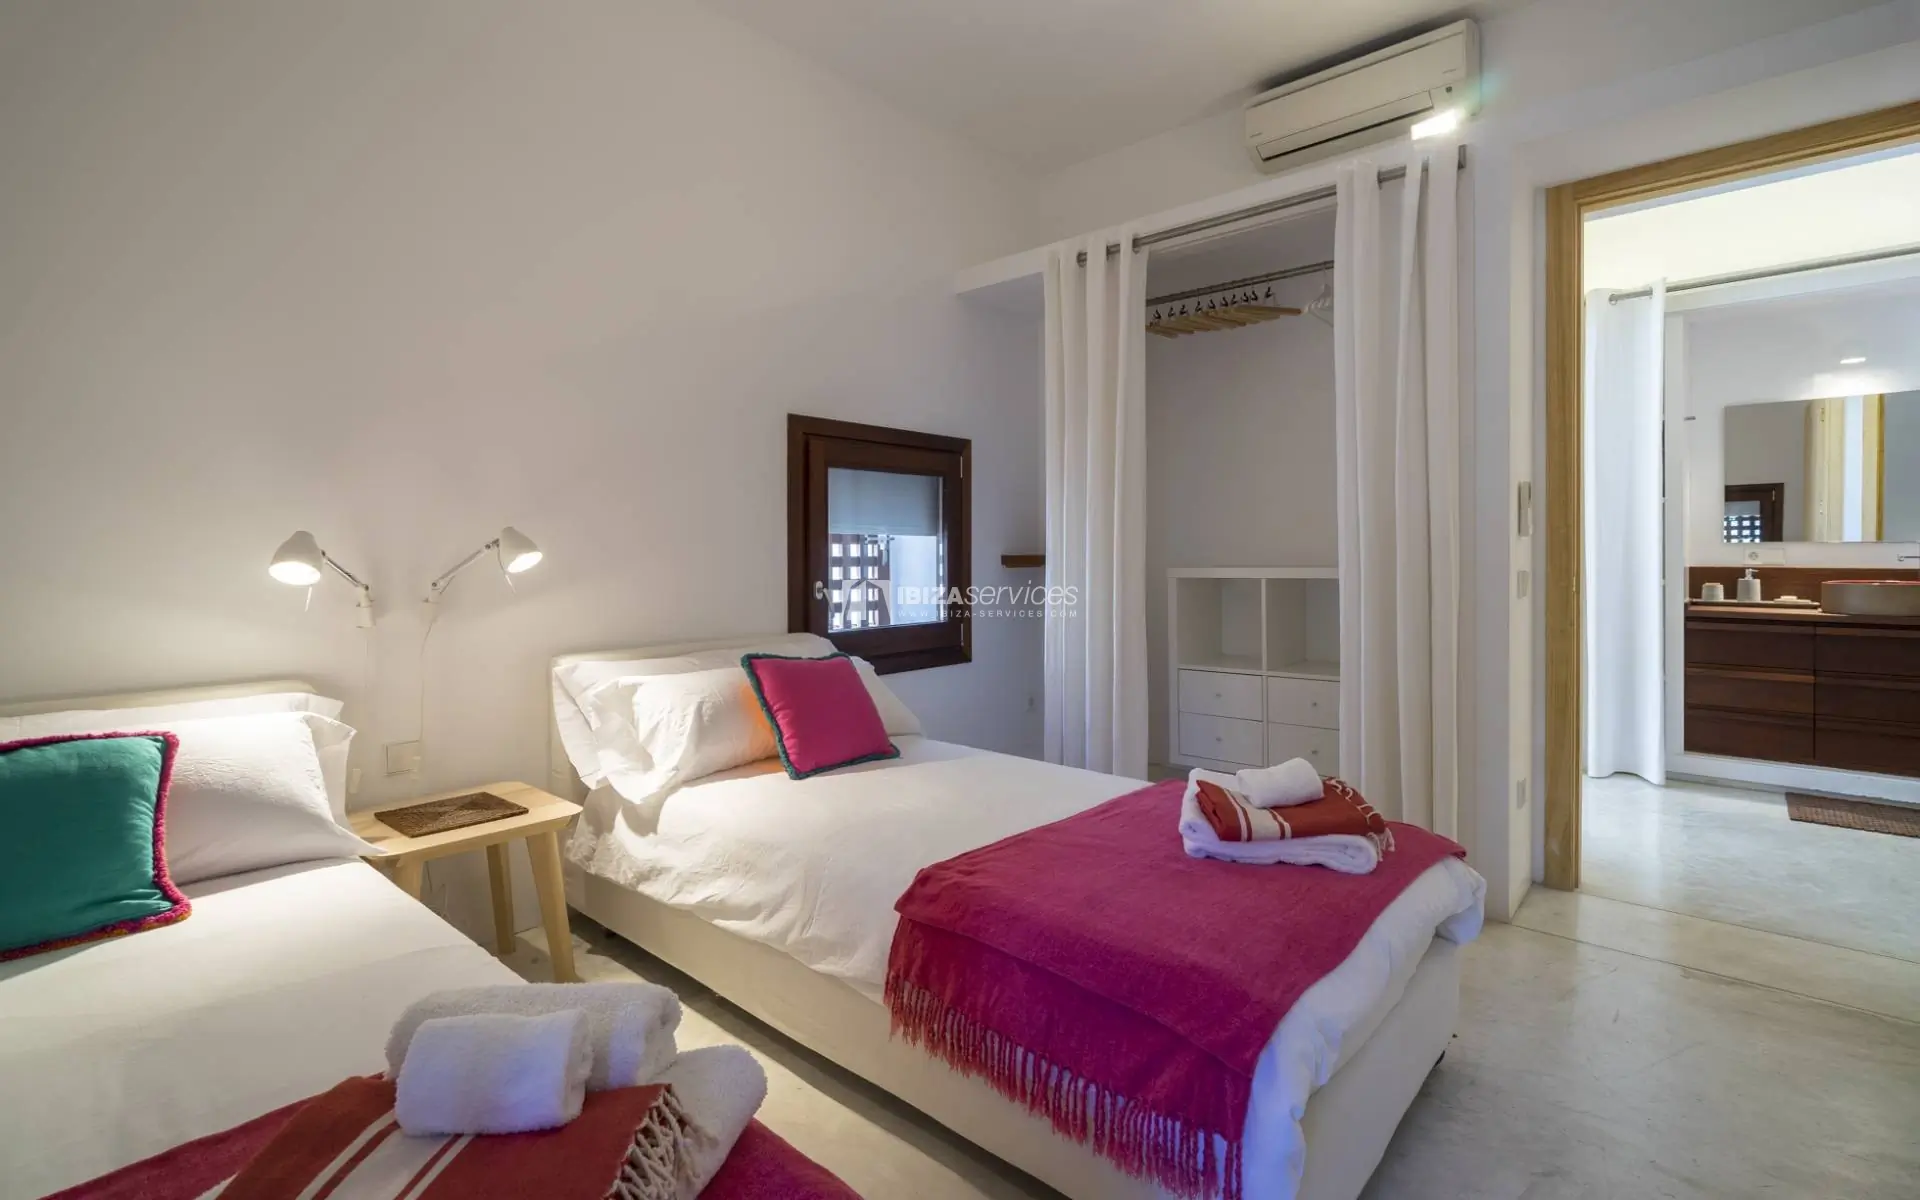 Ibiza vakantievilla Andrea Can Furnet 4 slaapkamers